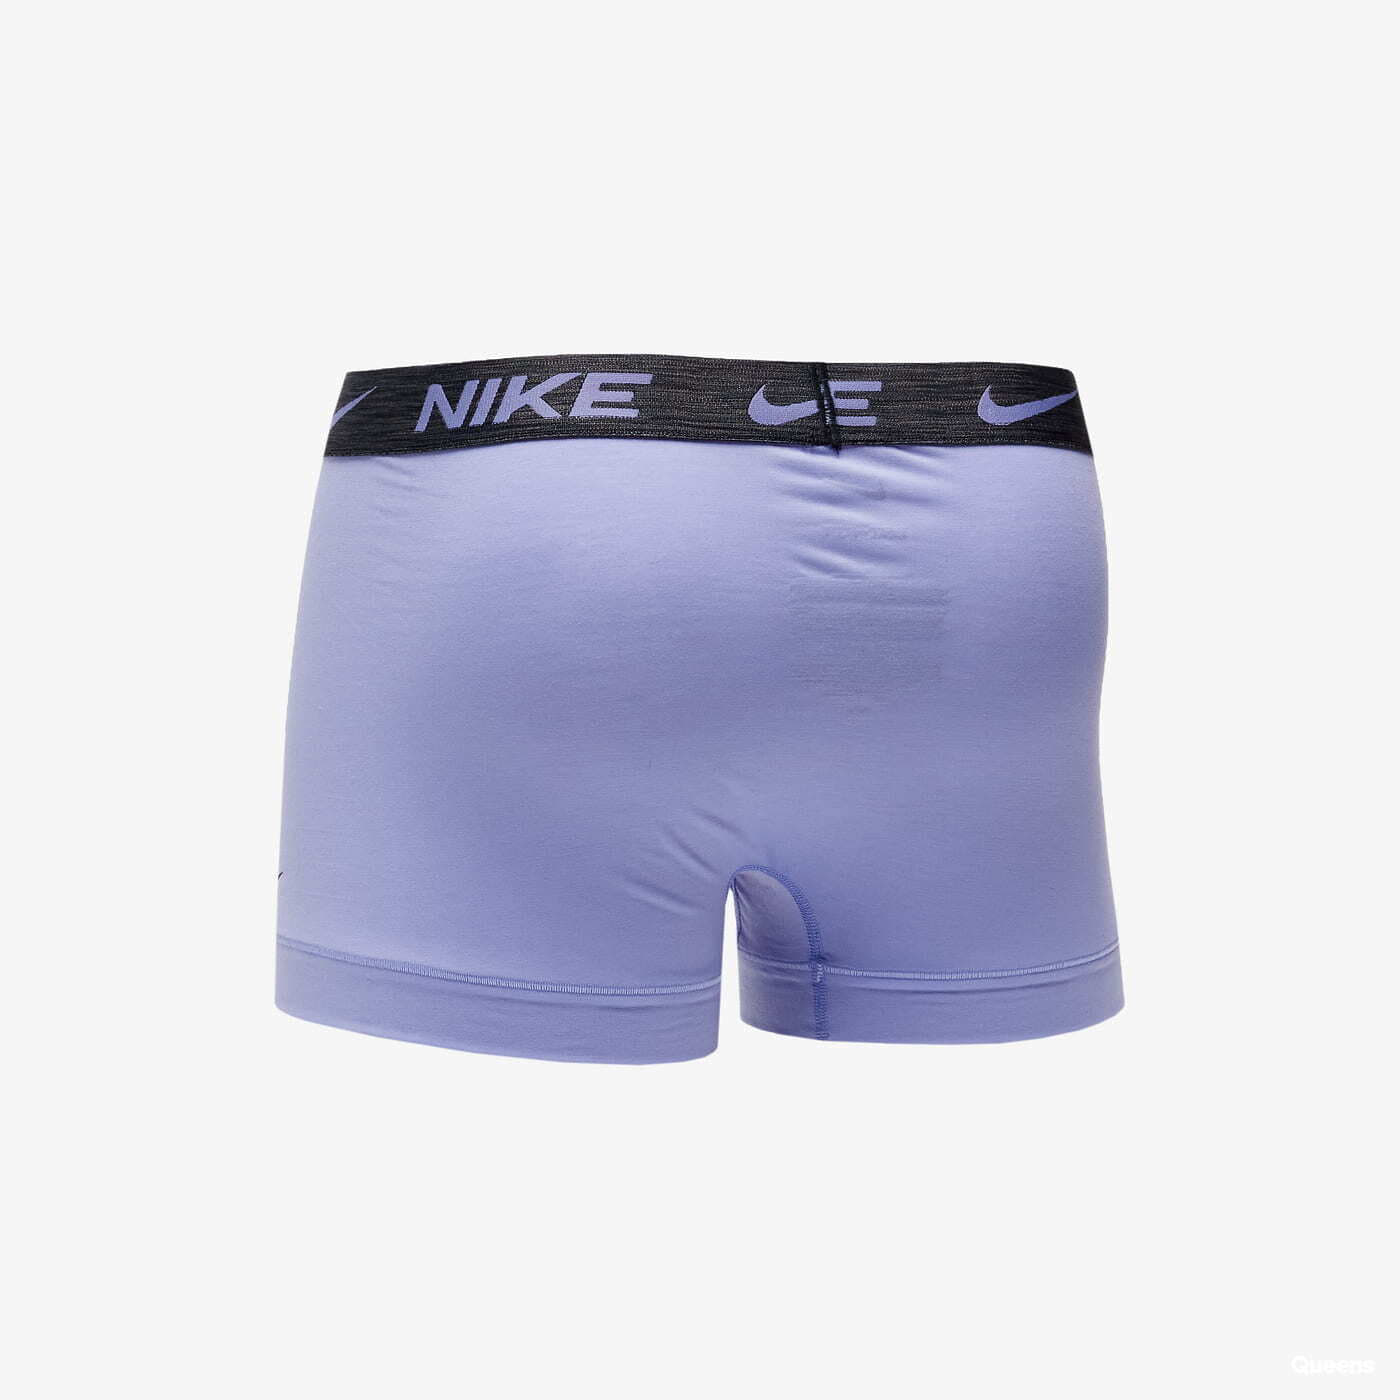 Boxer shorts Nike Dri-Fit ReLuxe Trunk 2-Pack Černé / Fialové